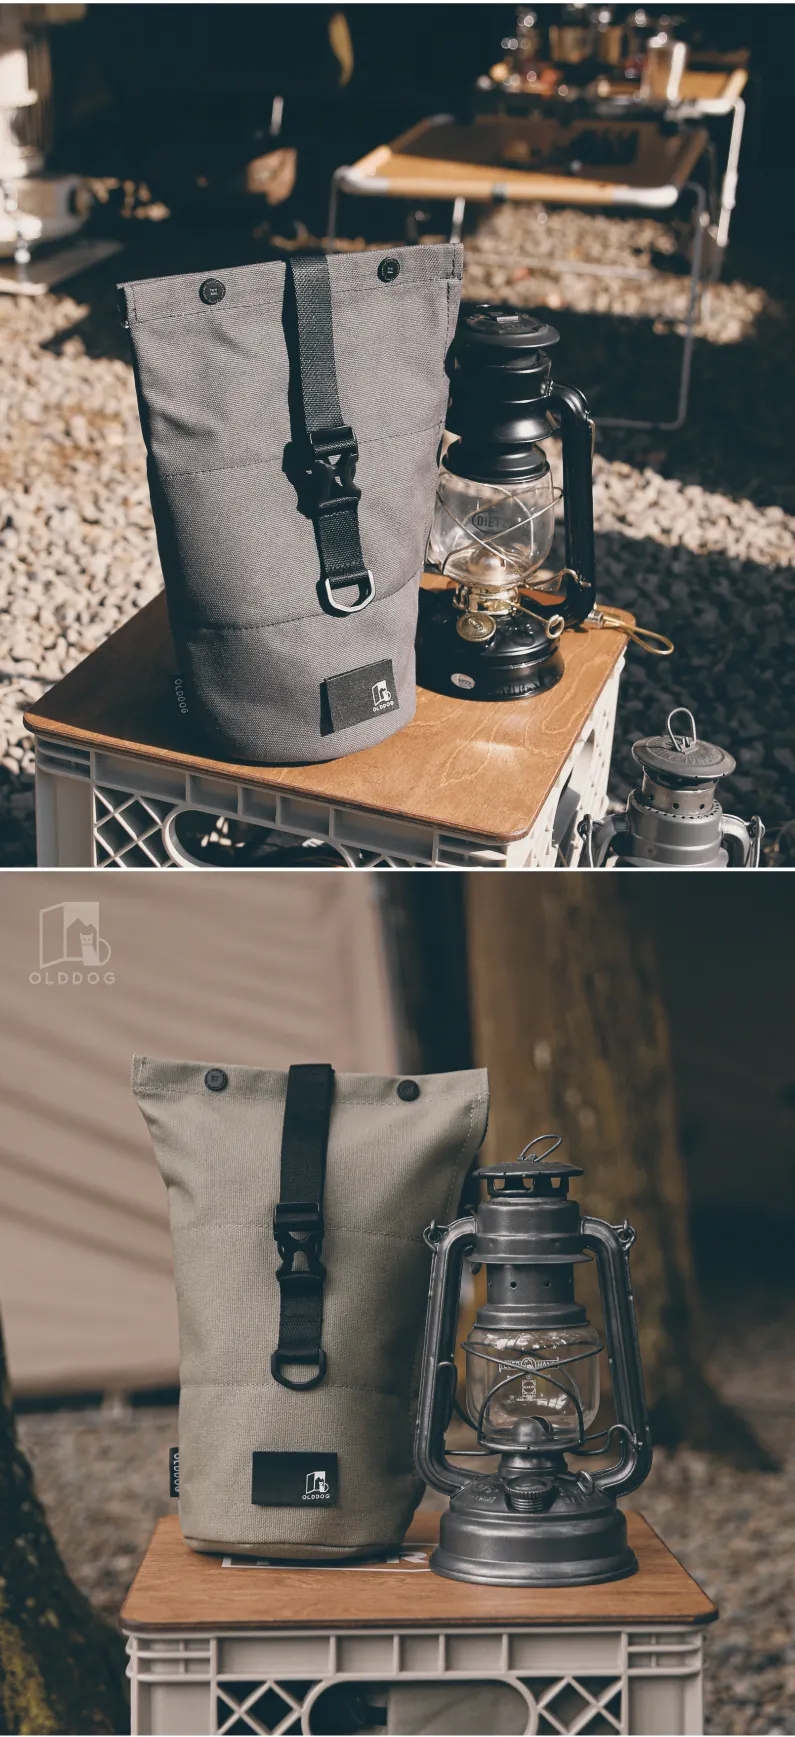 OLDDOG • HIRAME BAG 露營道具攜行袋 (鐵灰/ 卡其/ 軍綠 三色) 現貨供應中